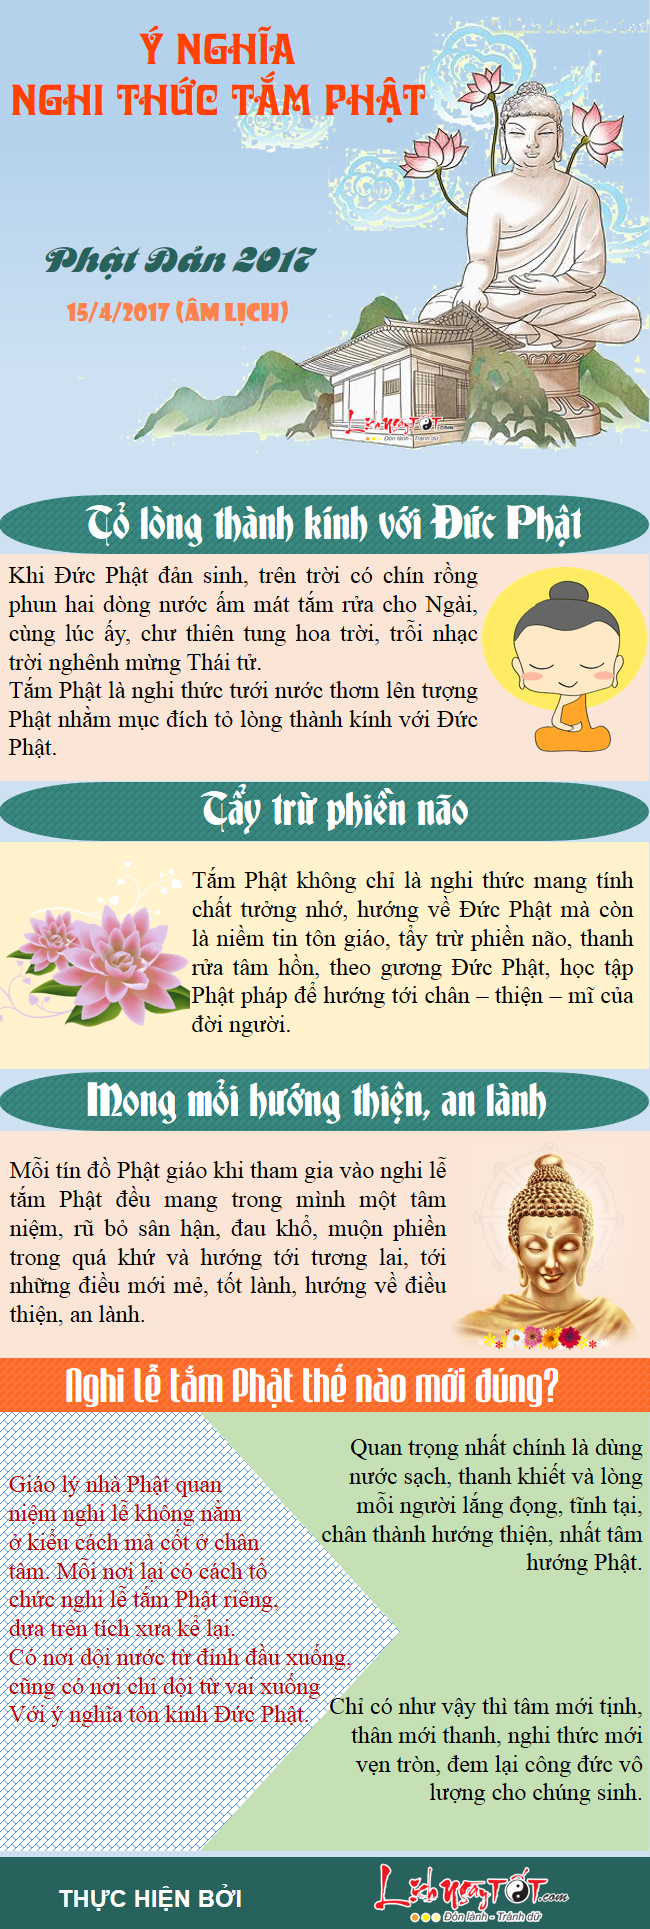 Le Phat Dan Y nghia sau sac cua nghi le tam Phat hinh anh goc